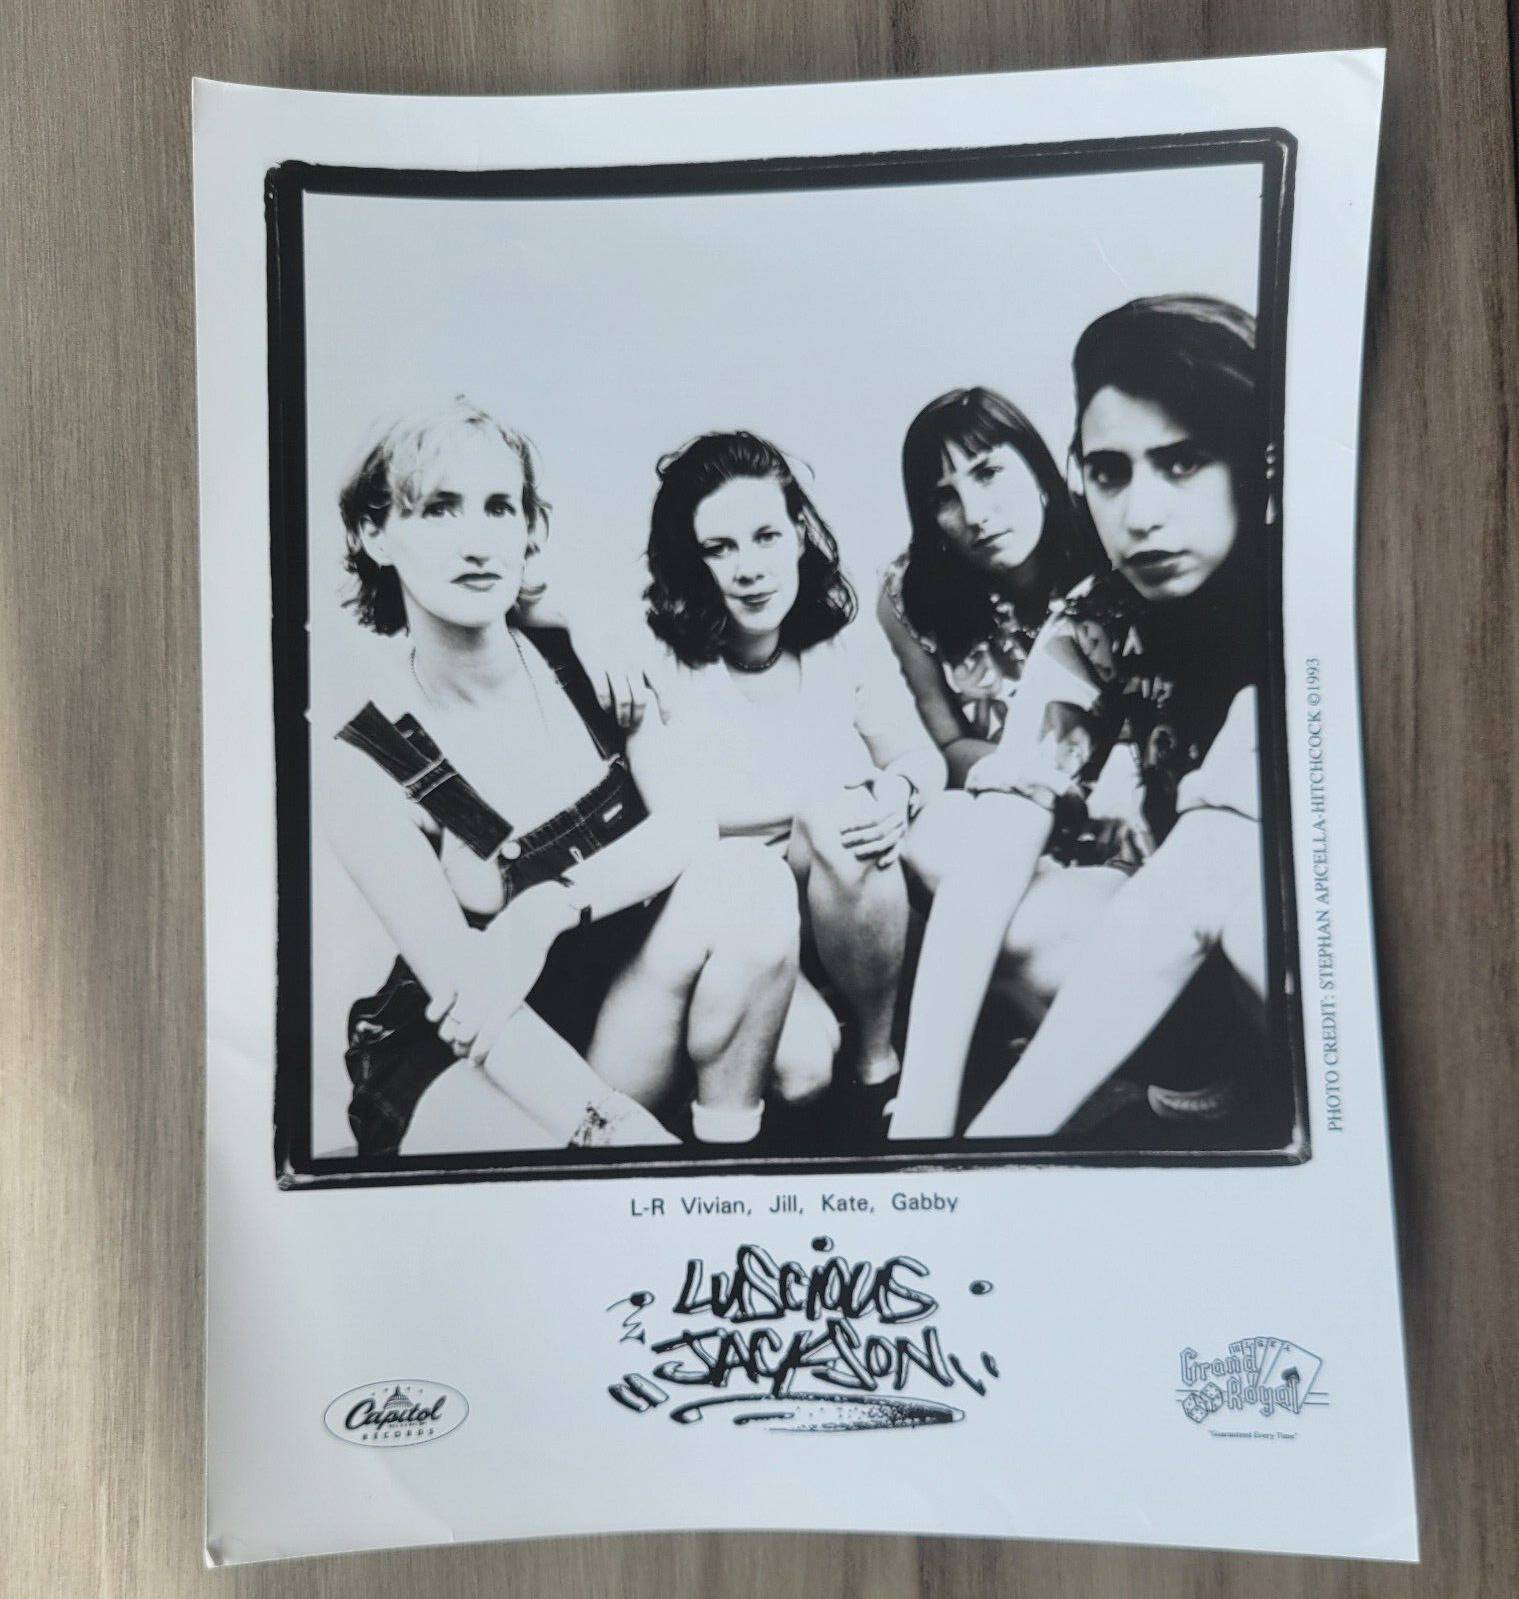 Luscious Jackson Capitol Records Promo Photo 1993